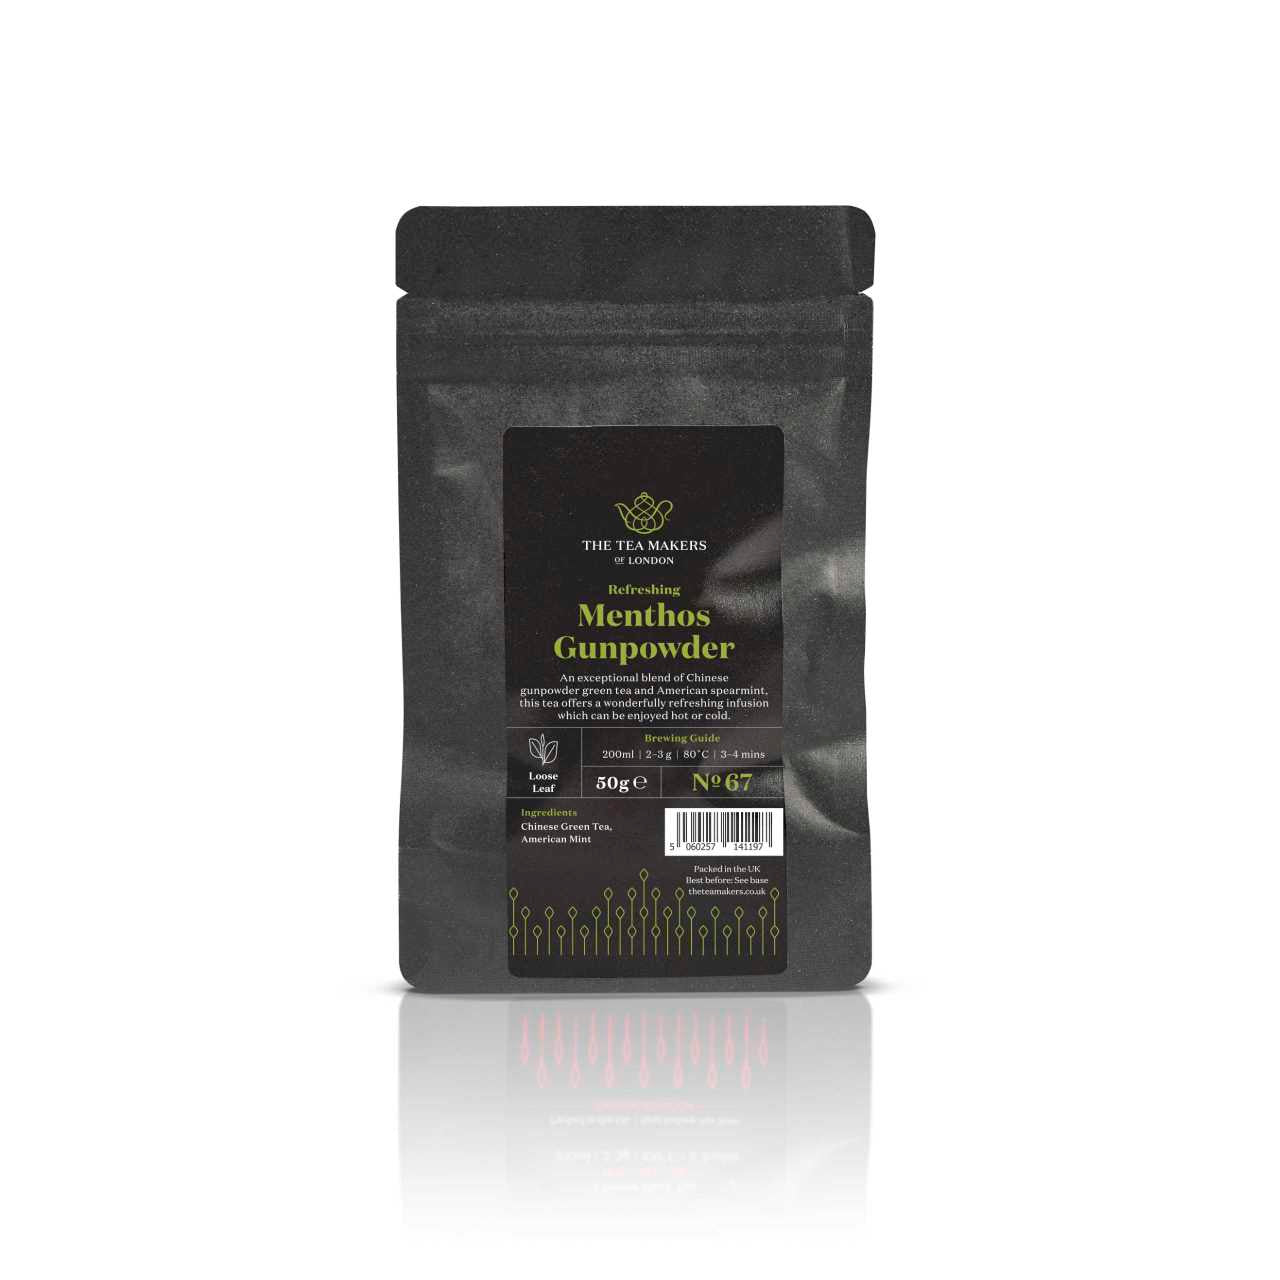 Menthos Gunpowder Loose Leaf Tea 50g Pack